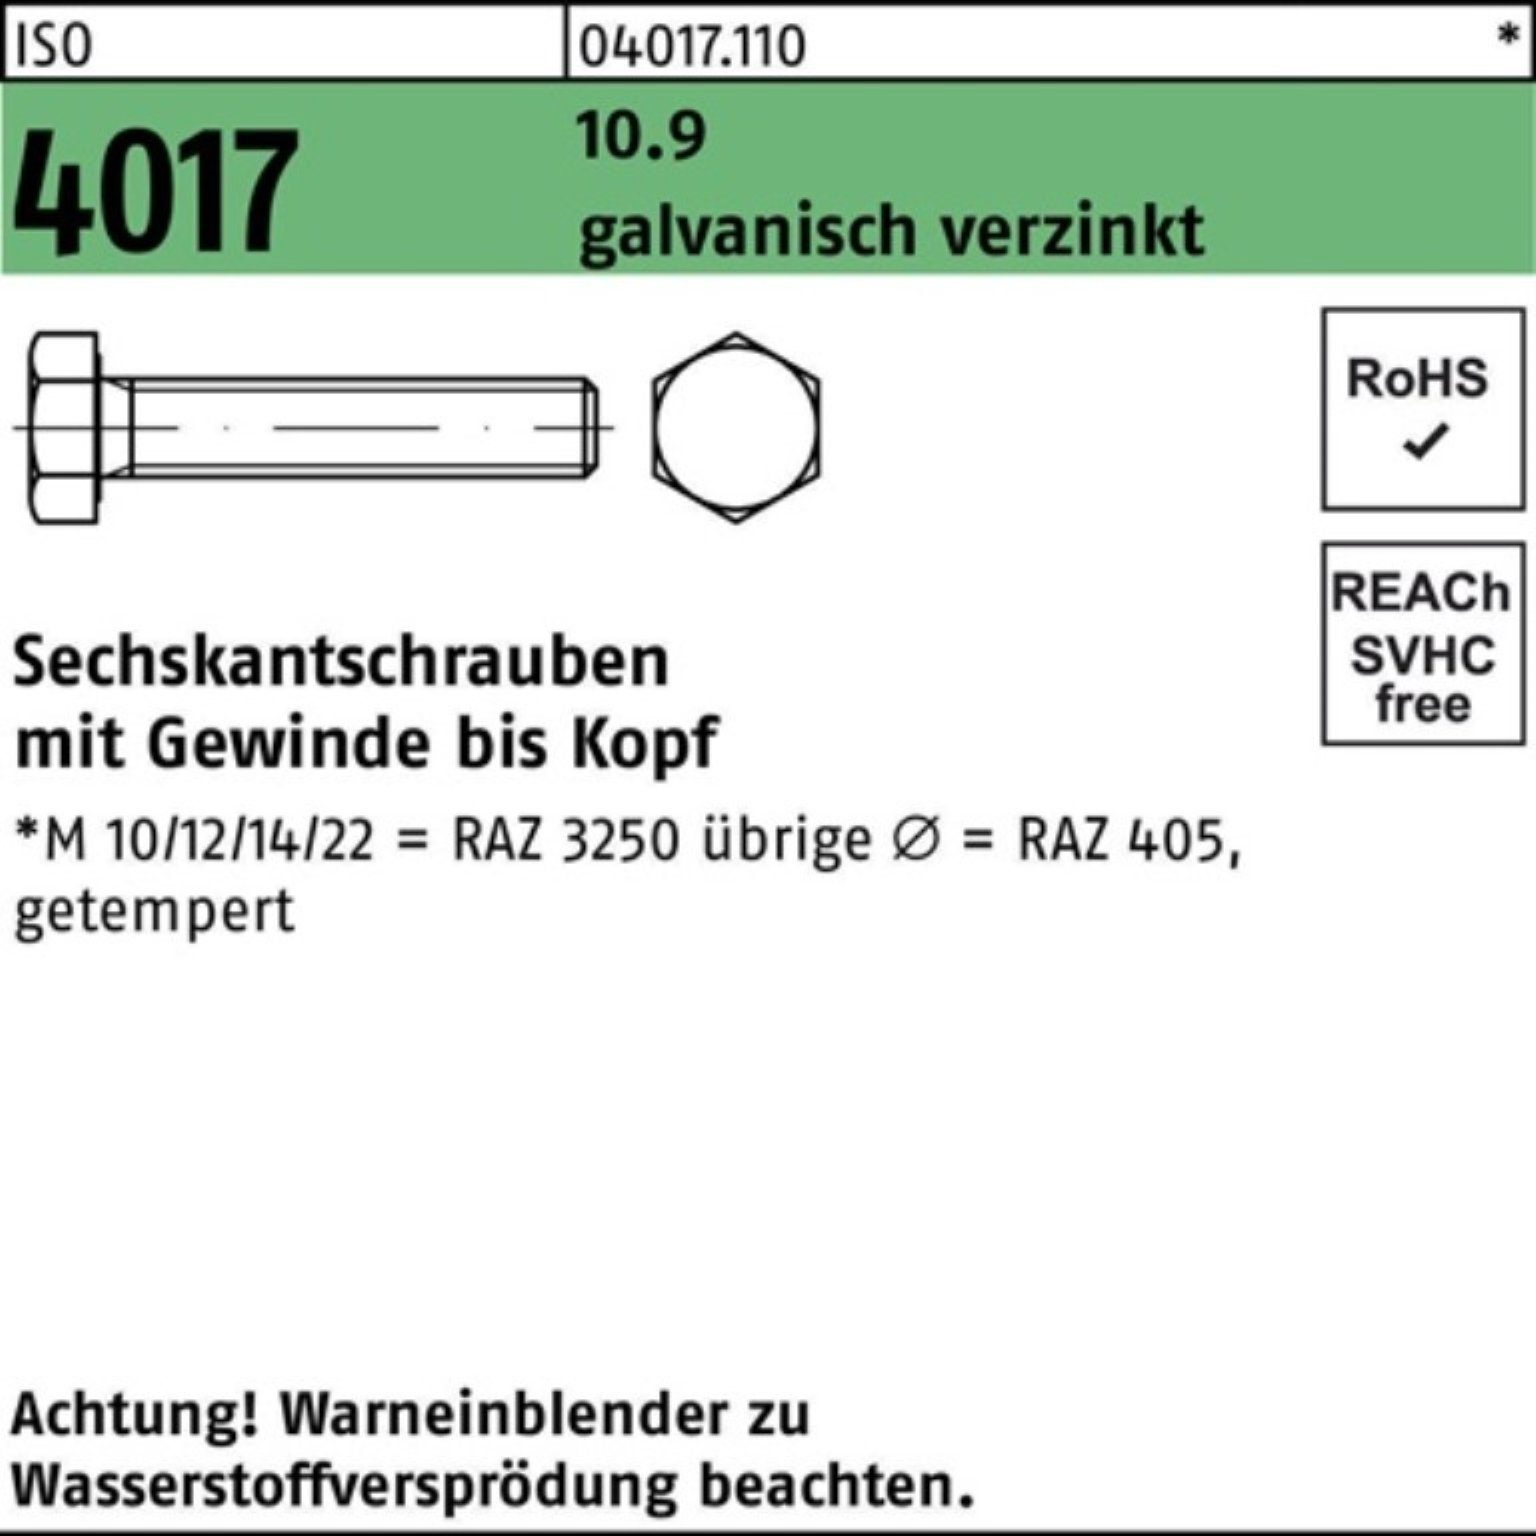 Bufab Sechskantschraube 100er St 10.9 75 4017 VG ISO 25 Pack galv.verz. Sechskantschraube M24x